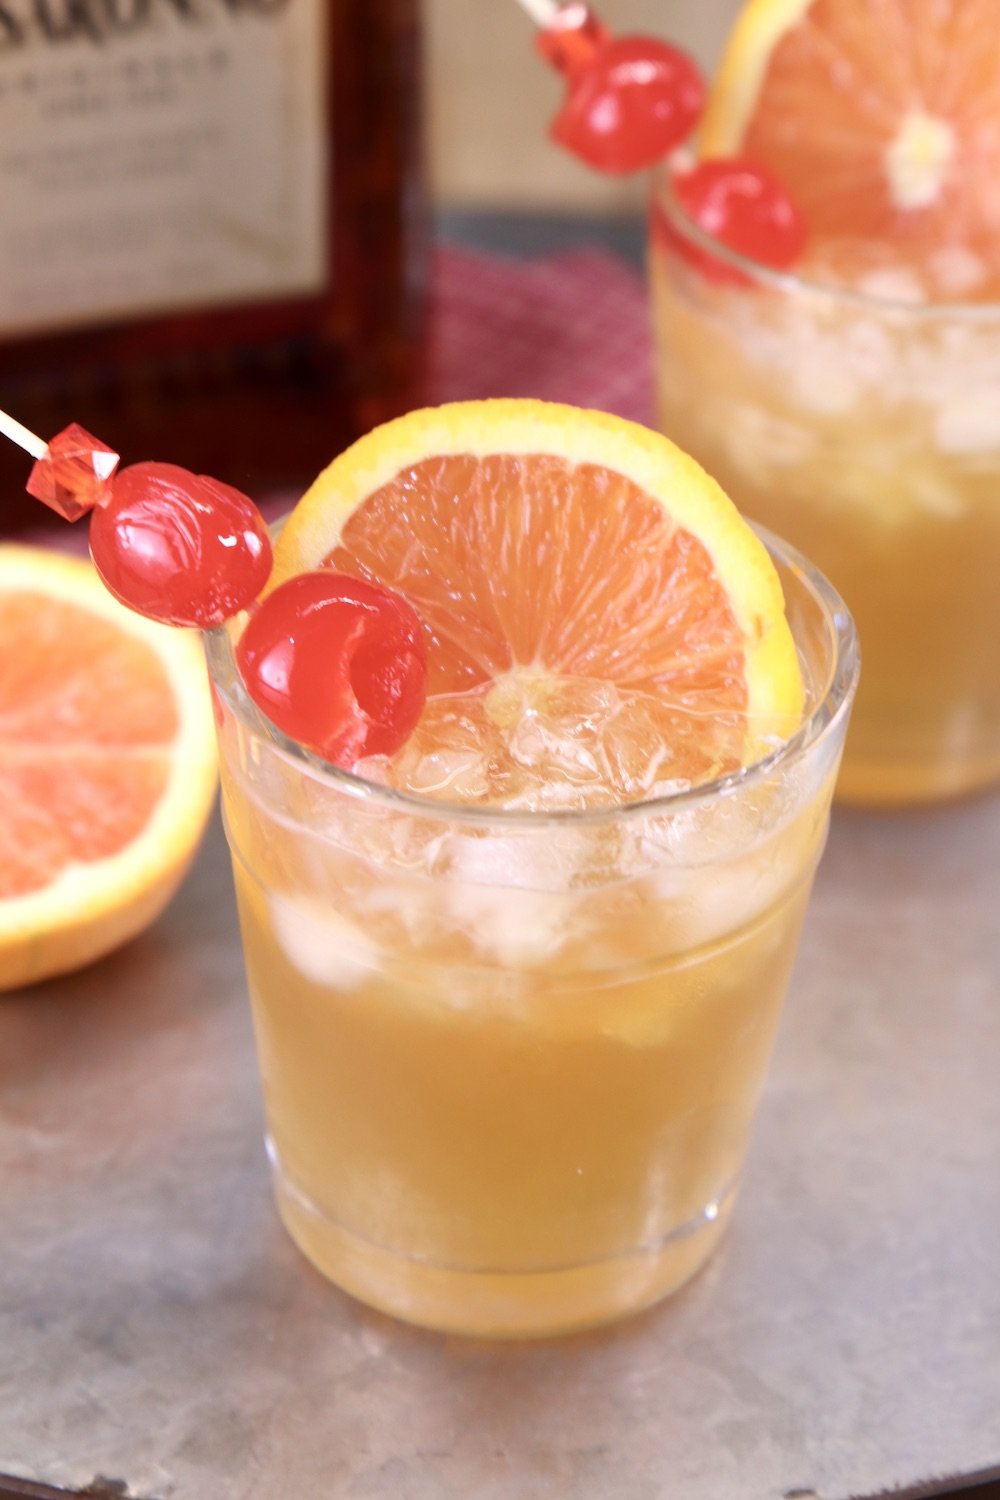 Amaretto Sour Cocktail with cherry and orange slice garnish